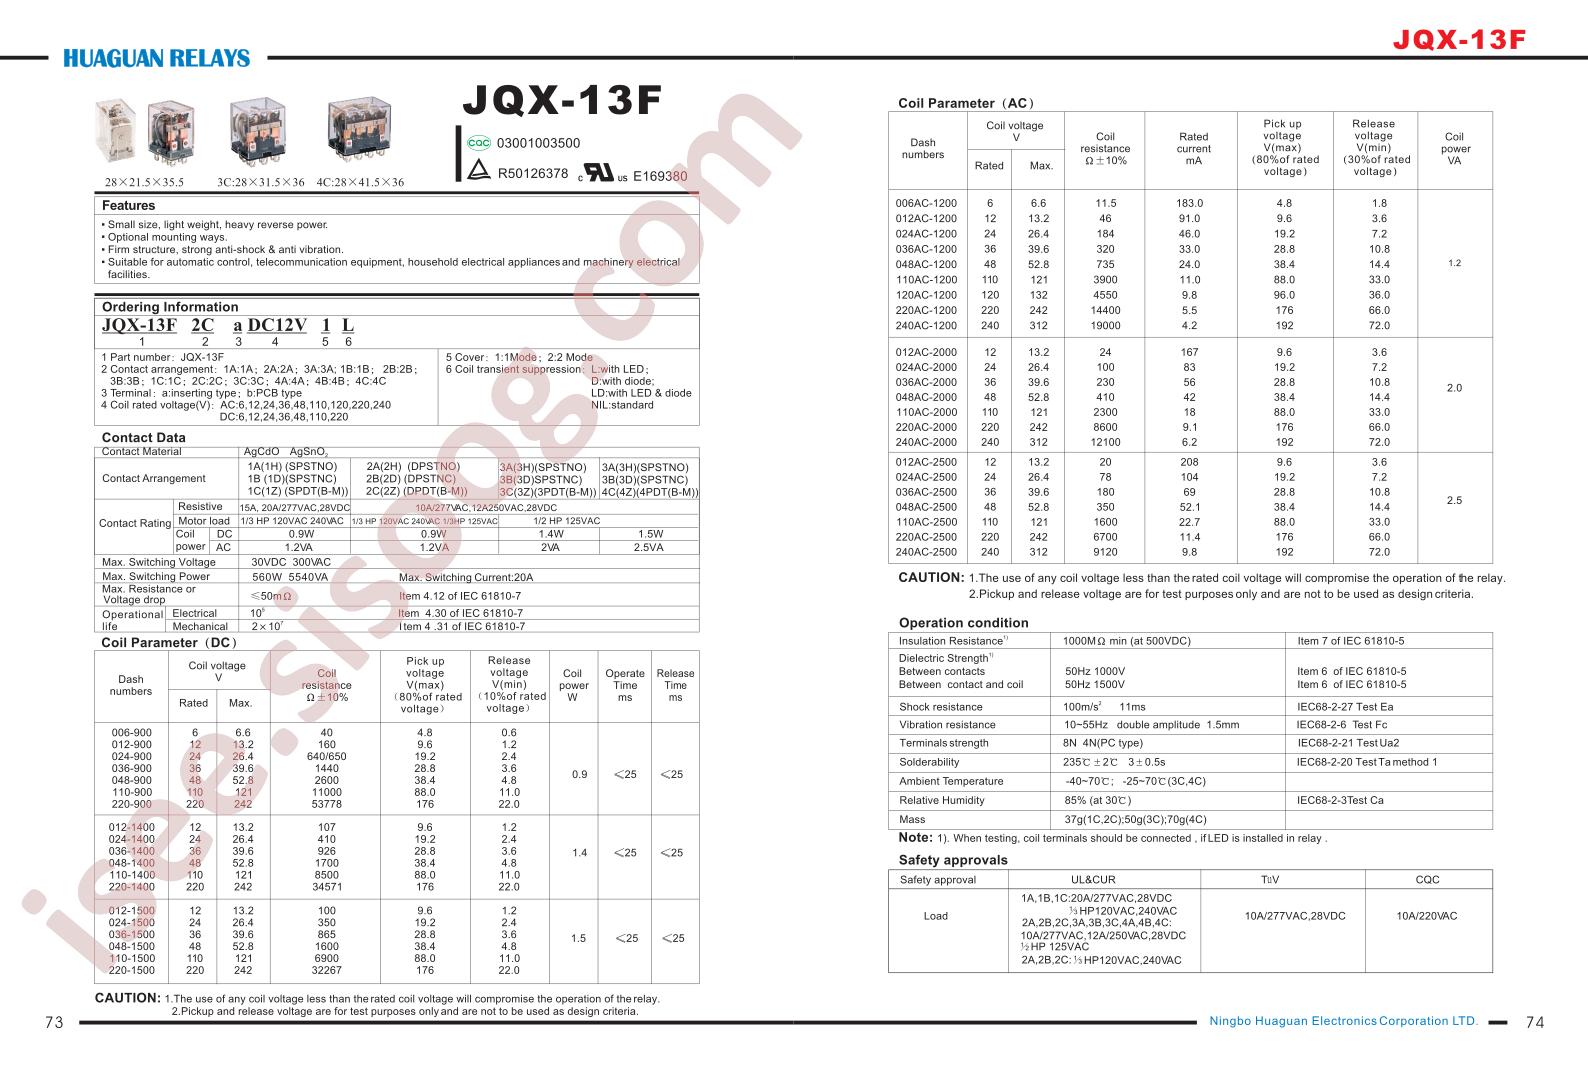 JQX-13F1B